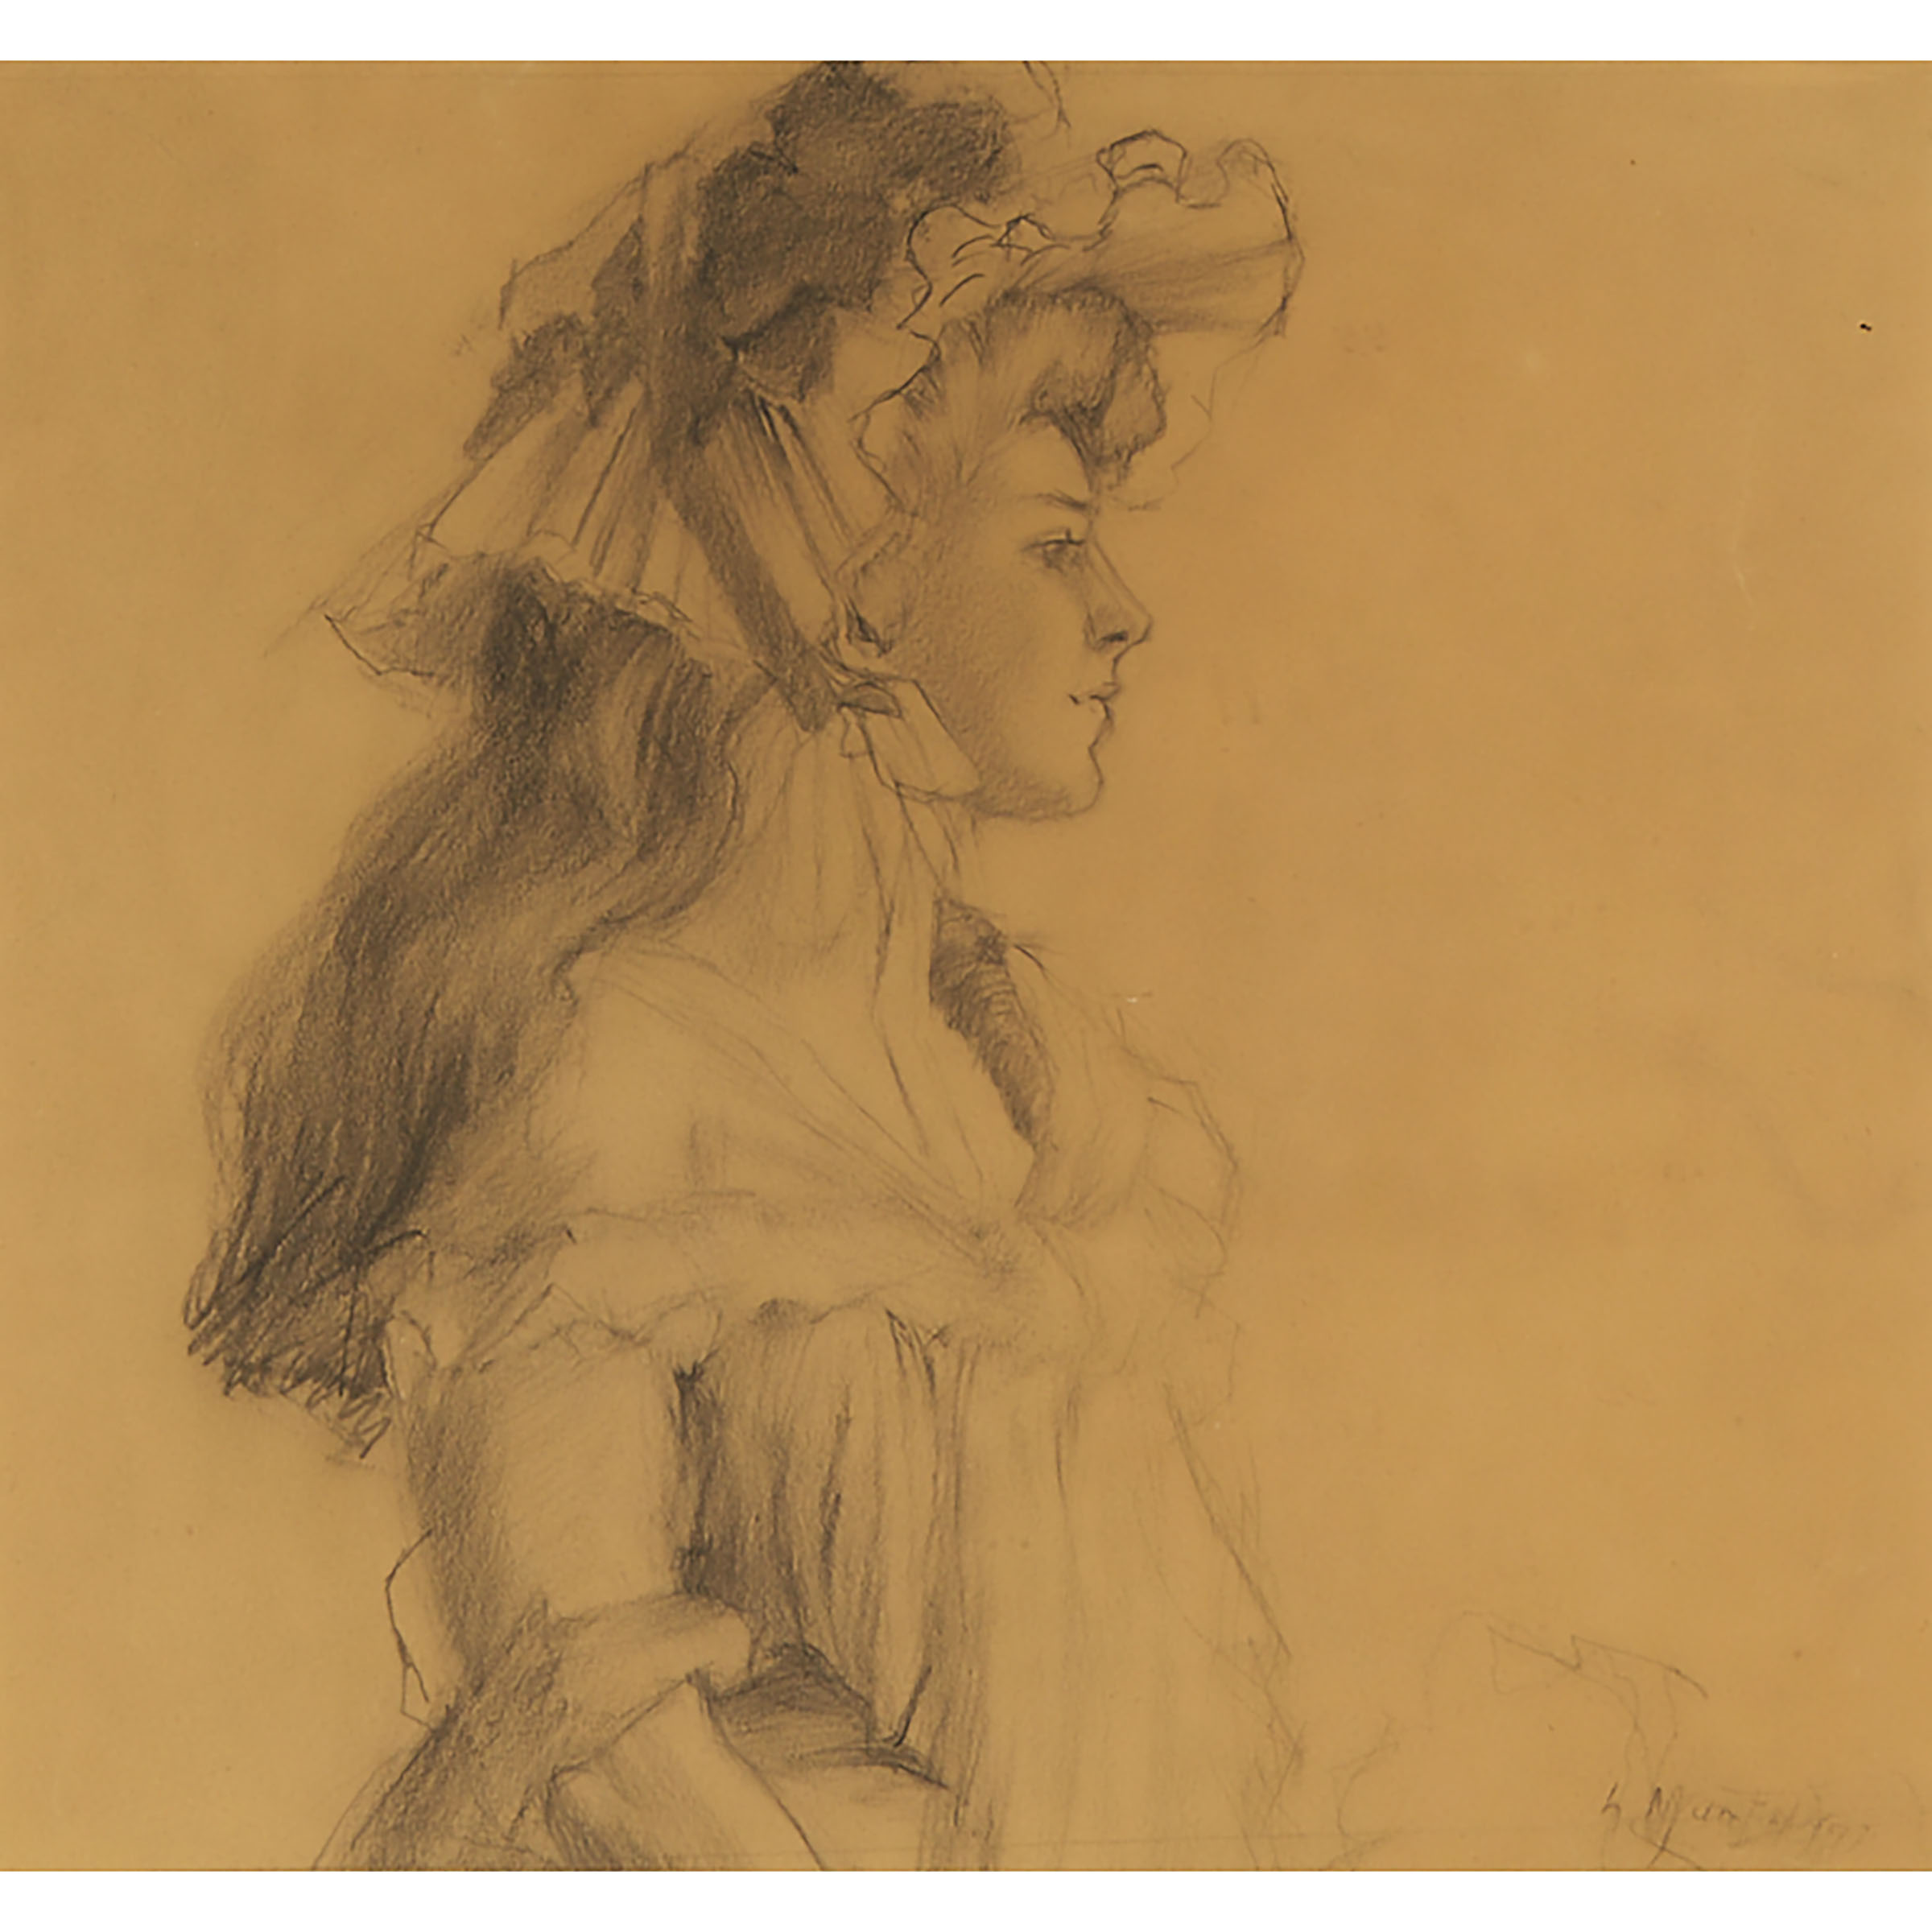 LAURA ADELINE MUNTZ LYALL, O.S.A., R.C.A. (1860-1930), CANADIAN